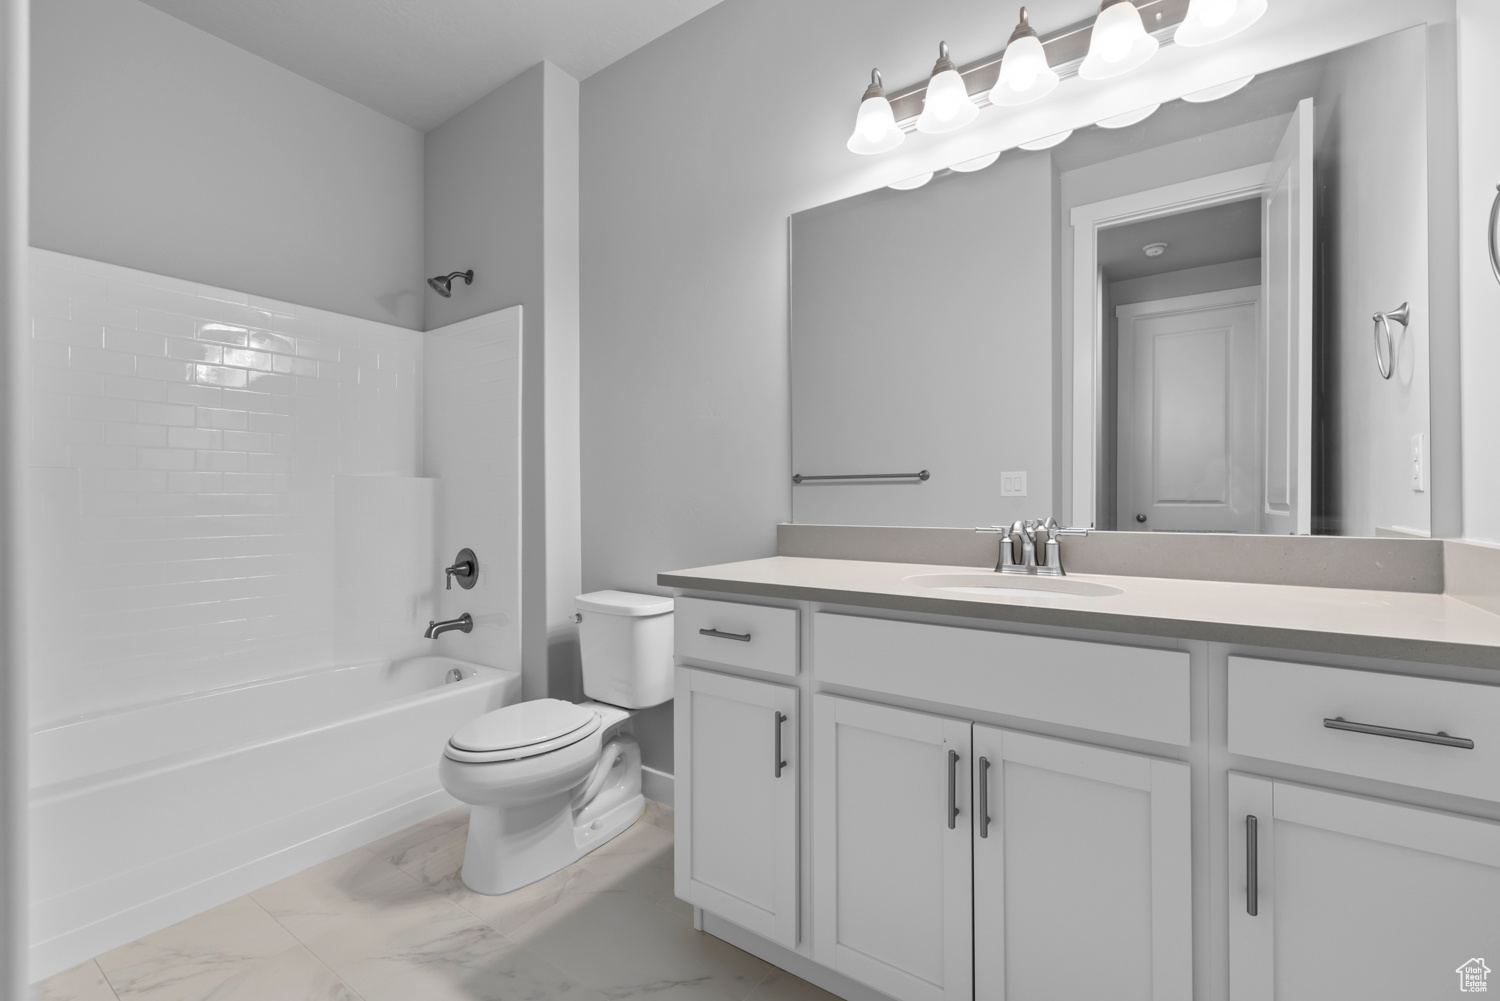 Full bathroom with vanity, tile floors, shower / bathtub combination, and toilet